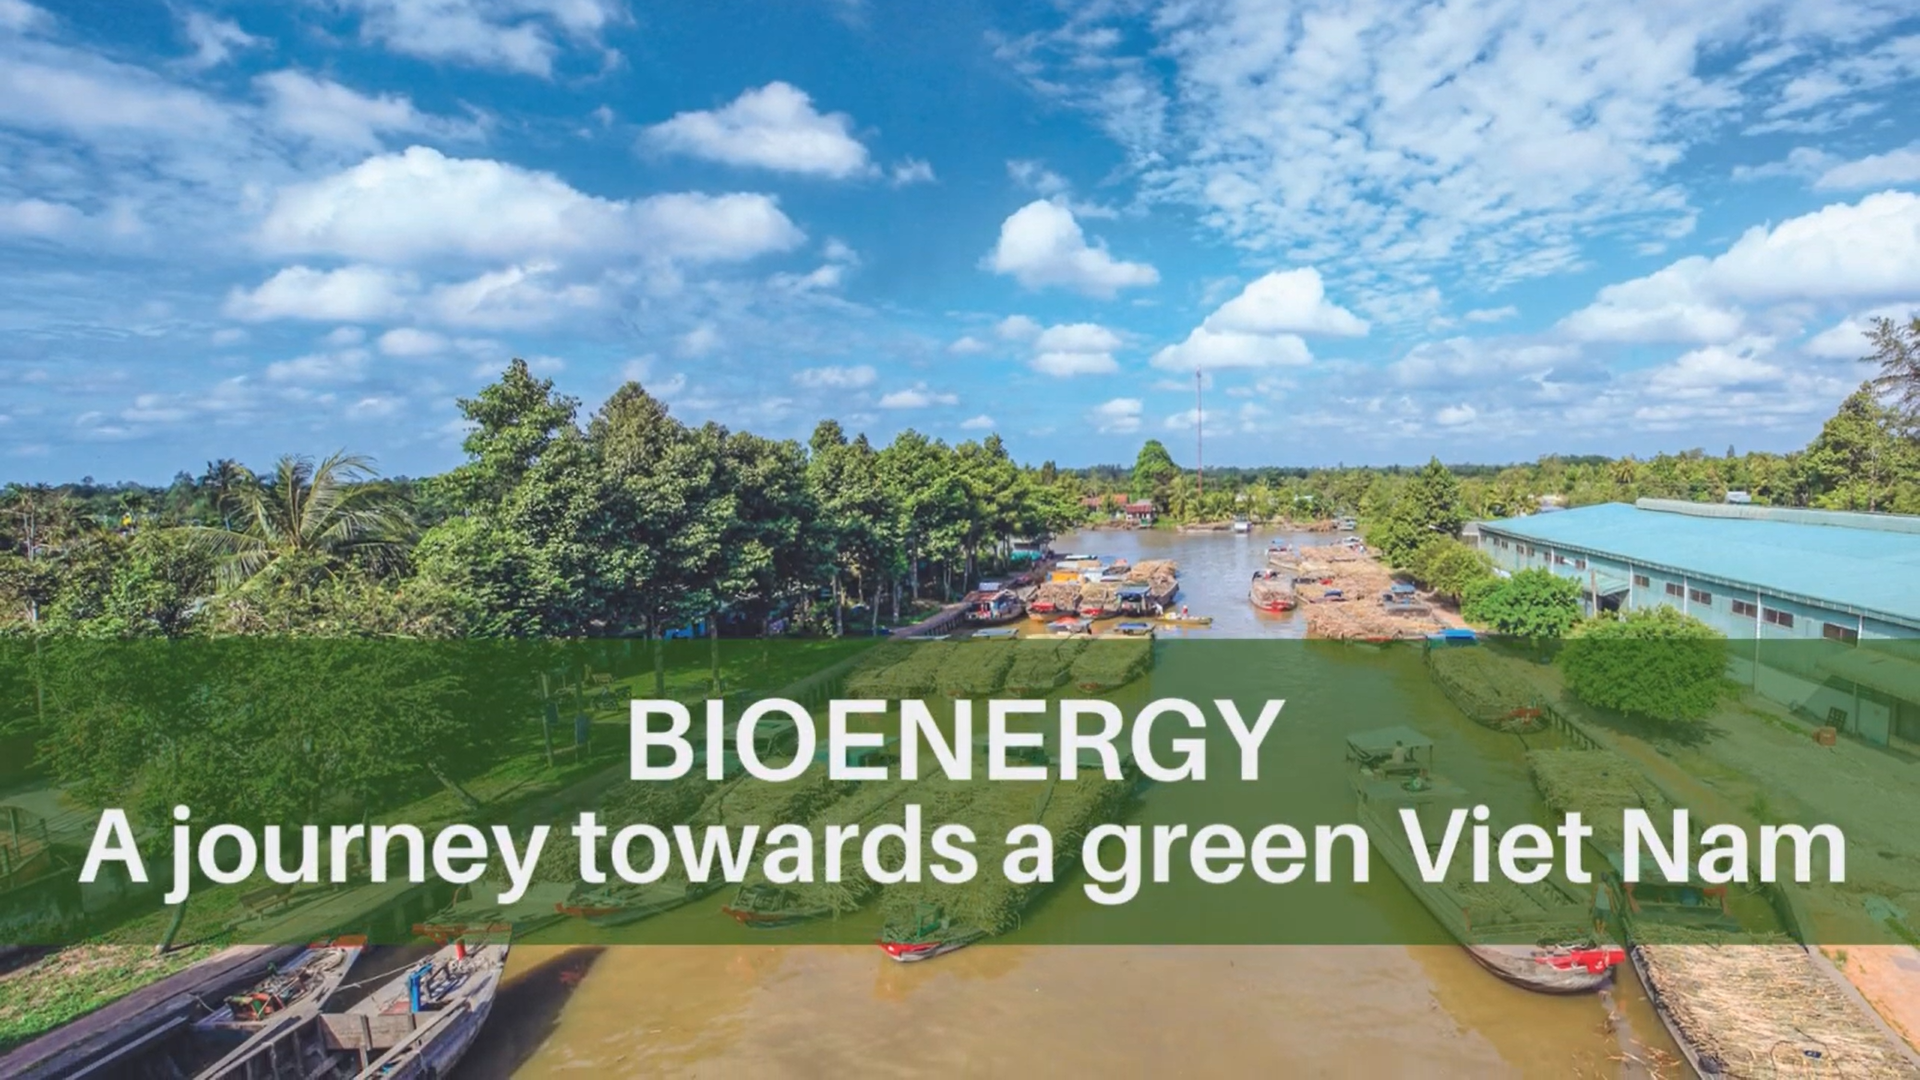 Bioenergy – A journey towards green Viet Nam